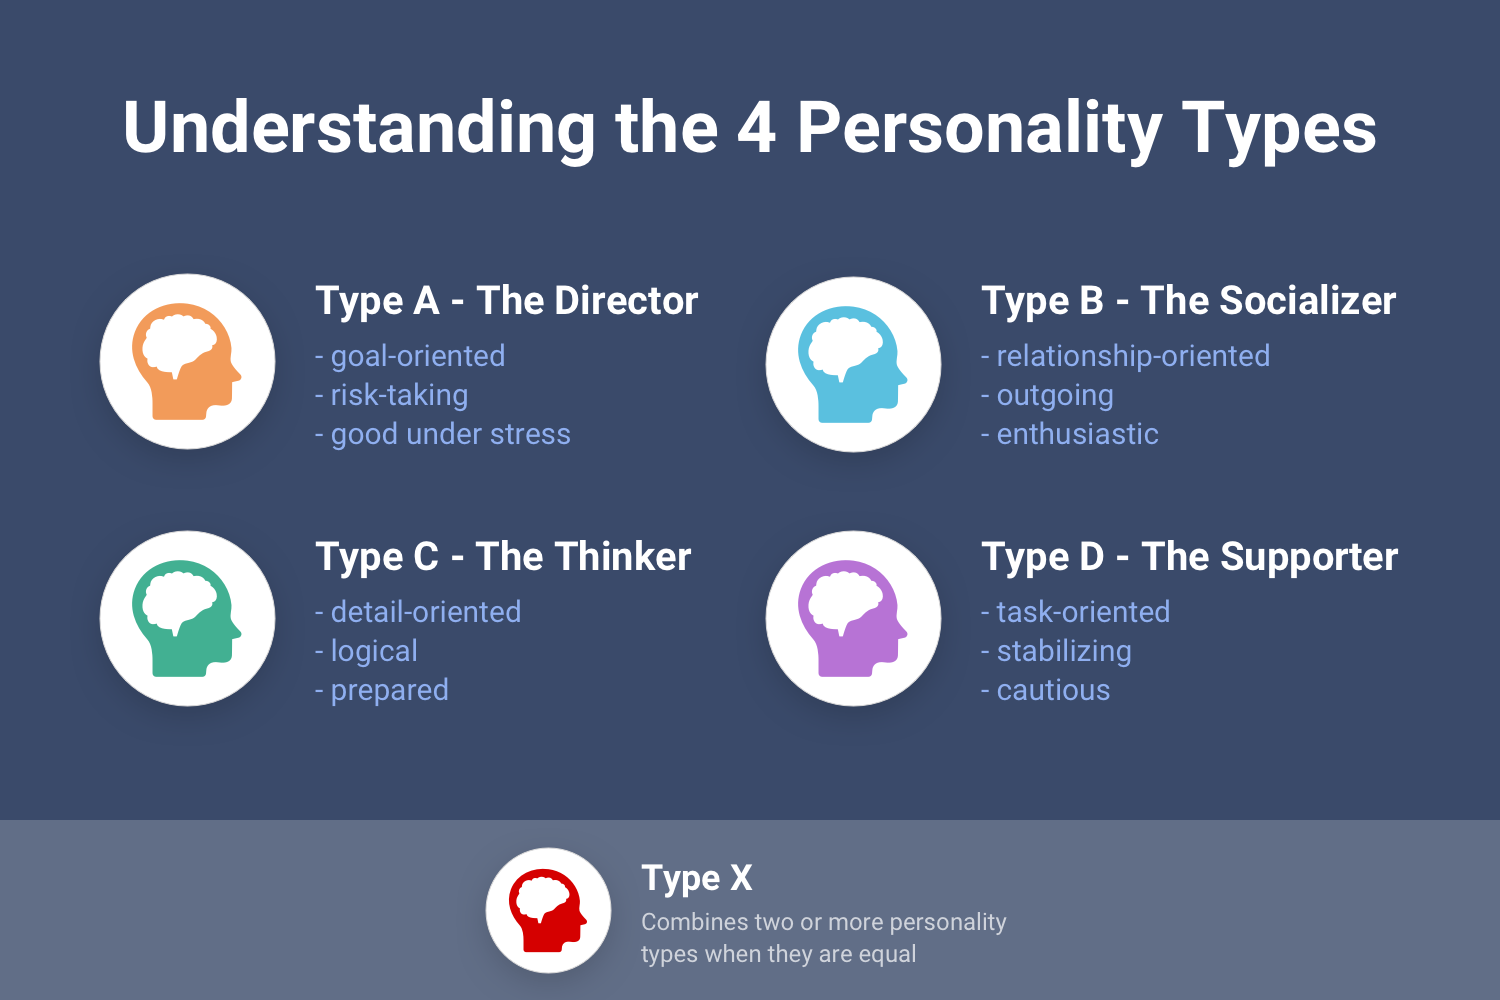 understanding-4-personality-types-A-B-C-D-X-145ee30622f0cdba9e667214ad1466eb99fa7bf830ed63fcfc4e7ca754e71ff8d8c30ce1402379ab26e3f54e0867a7071463c5c36f7296de84aa04547e19a4d4.png